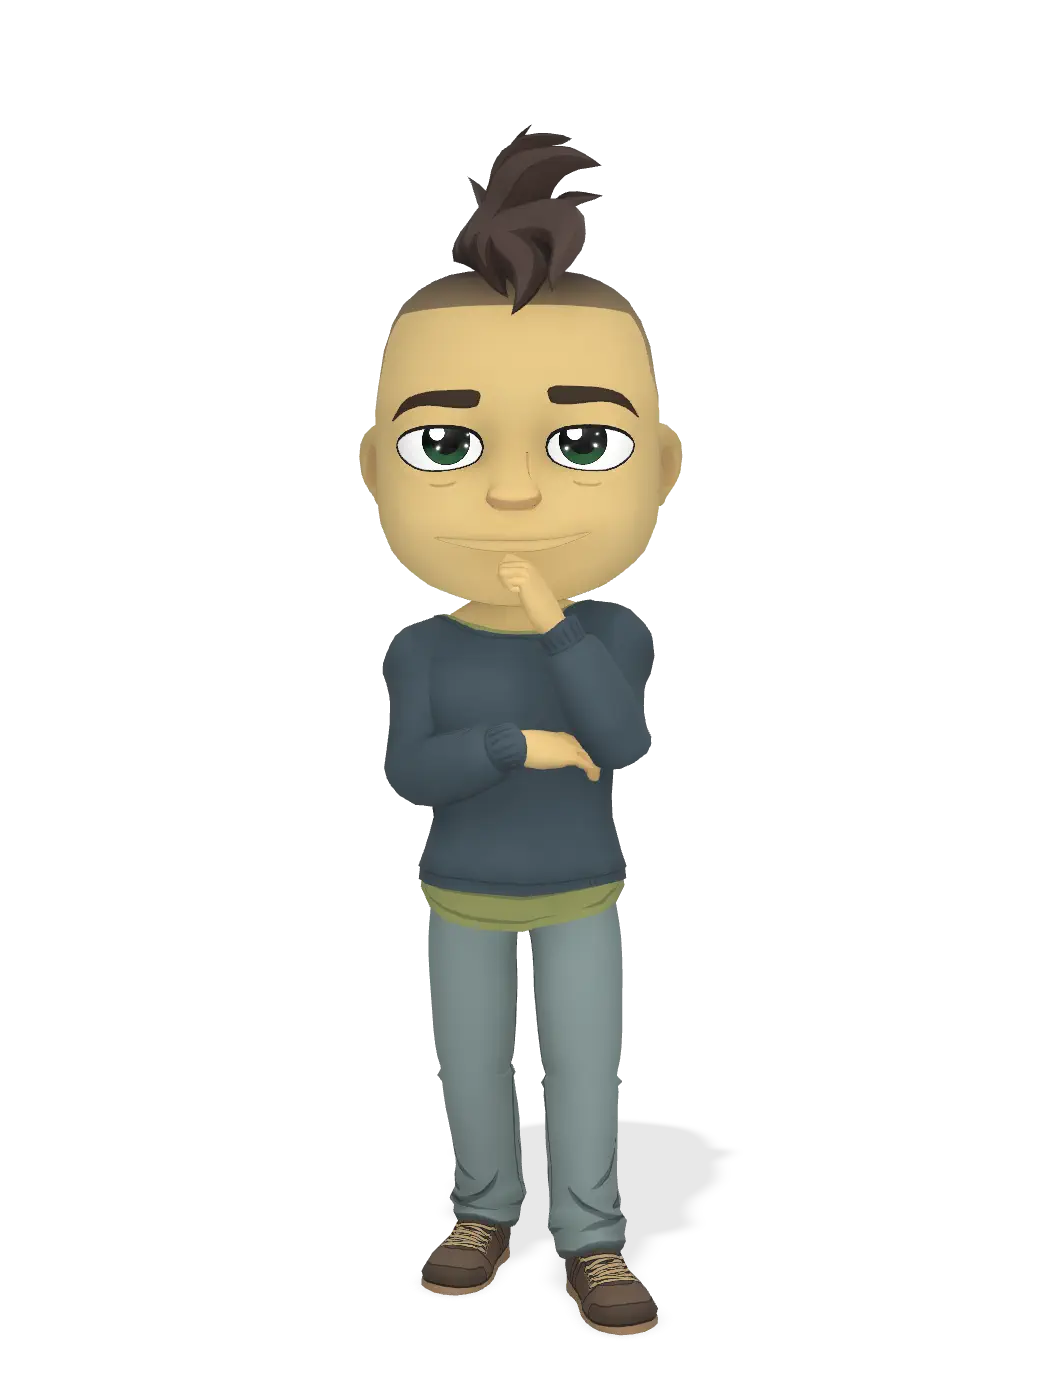 3D Bitmoji for lufre6 avatar